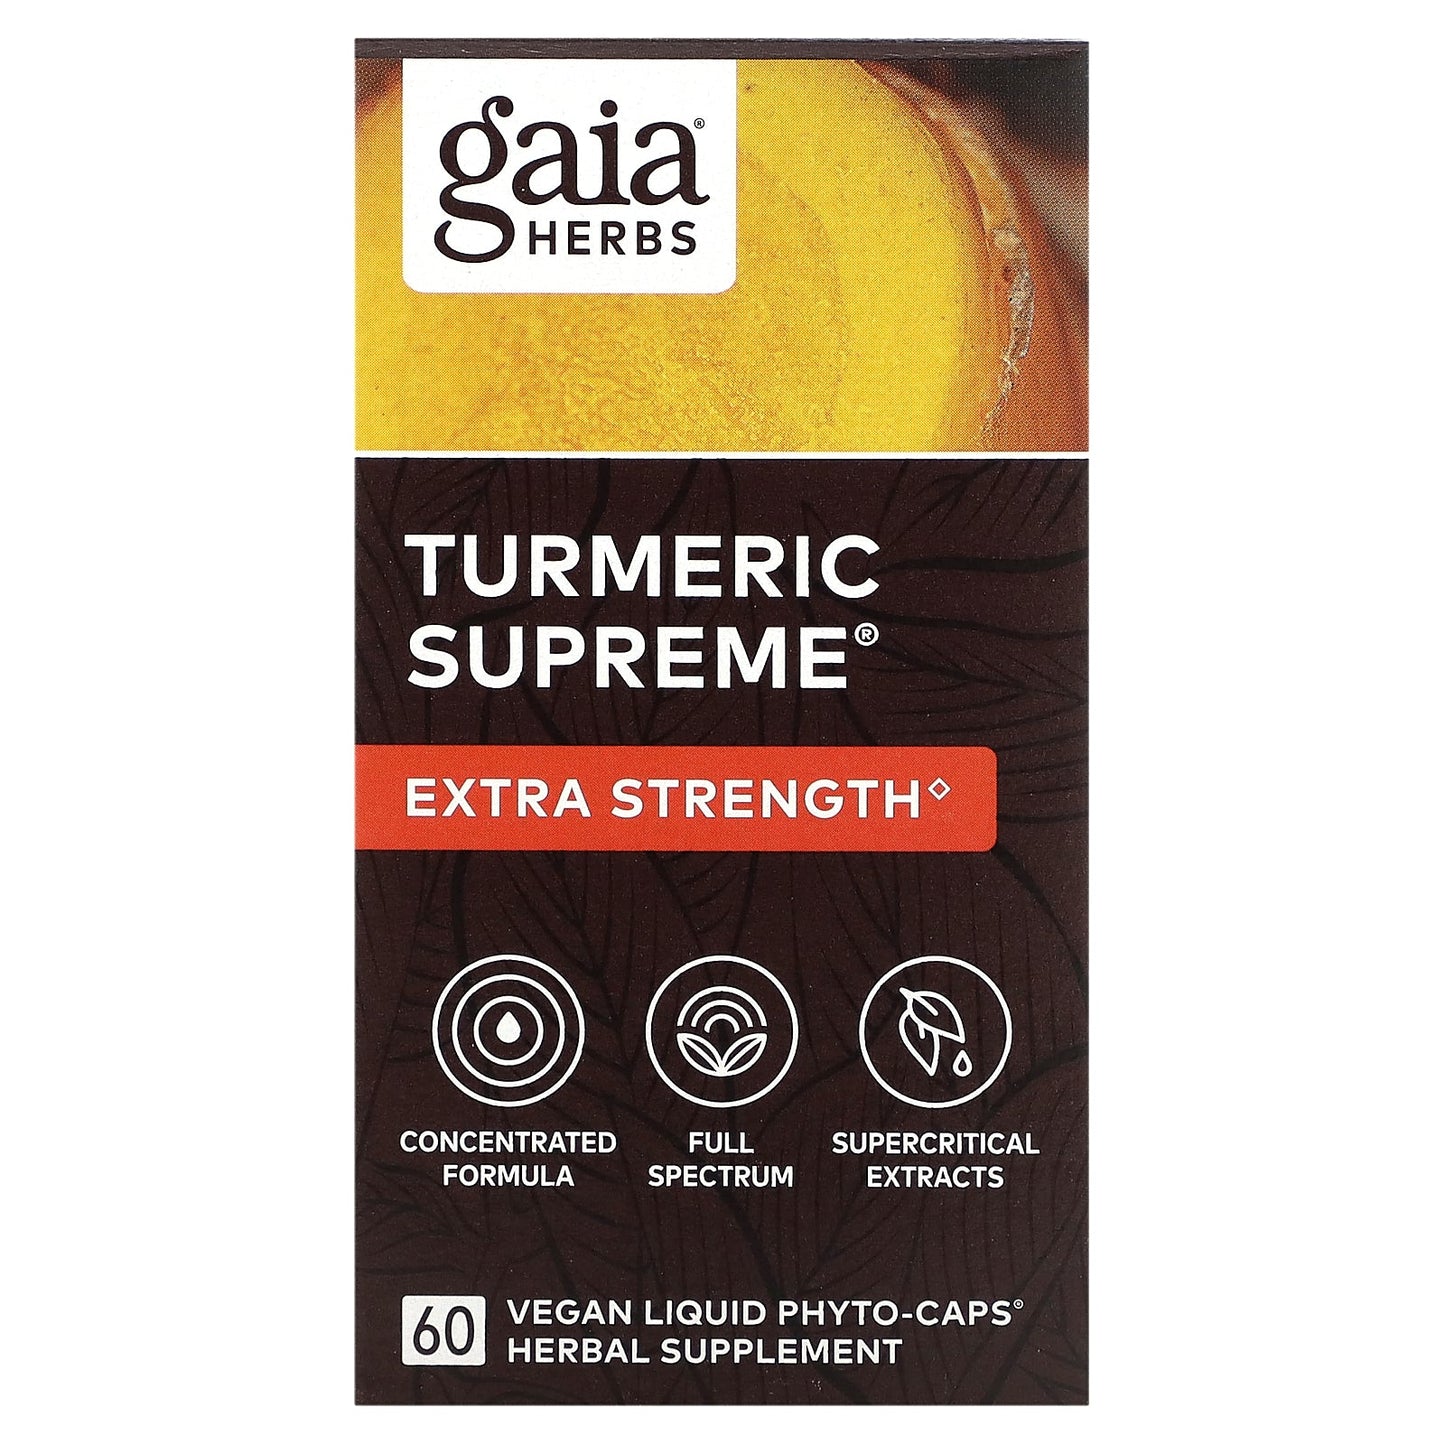 Gaia Herbs, Turmeric Supreme, Extra Strength, 60 Vegan Liquid Phyto-Caps